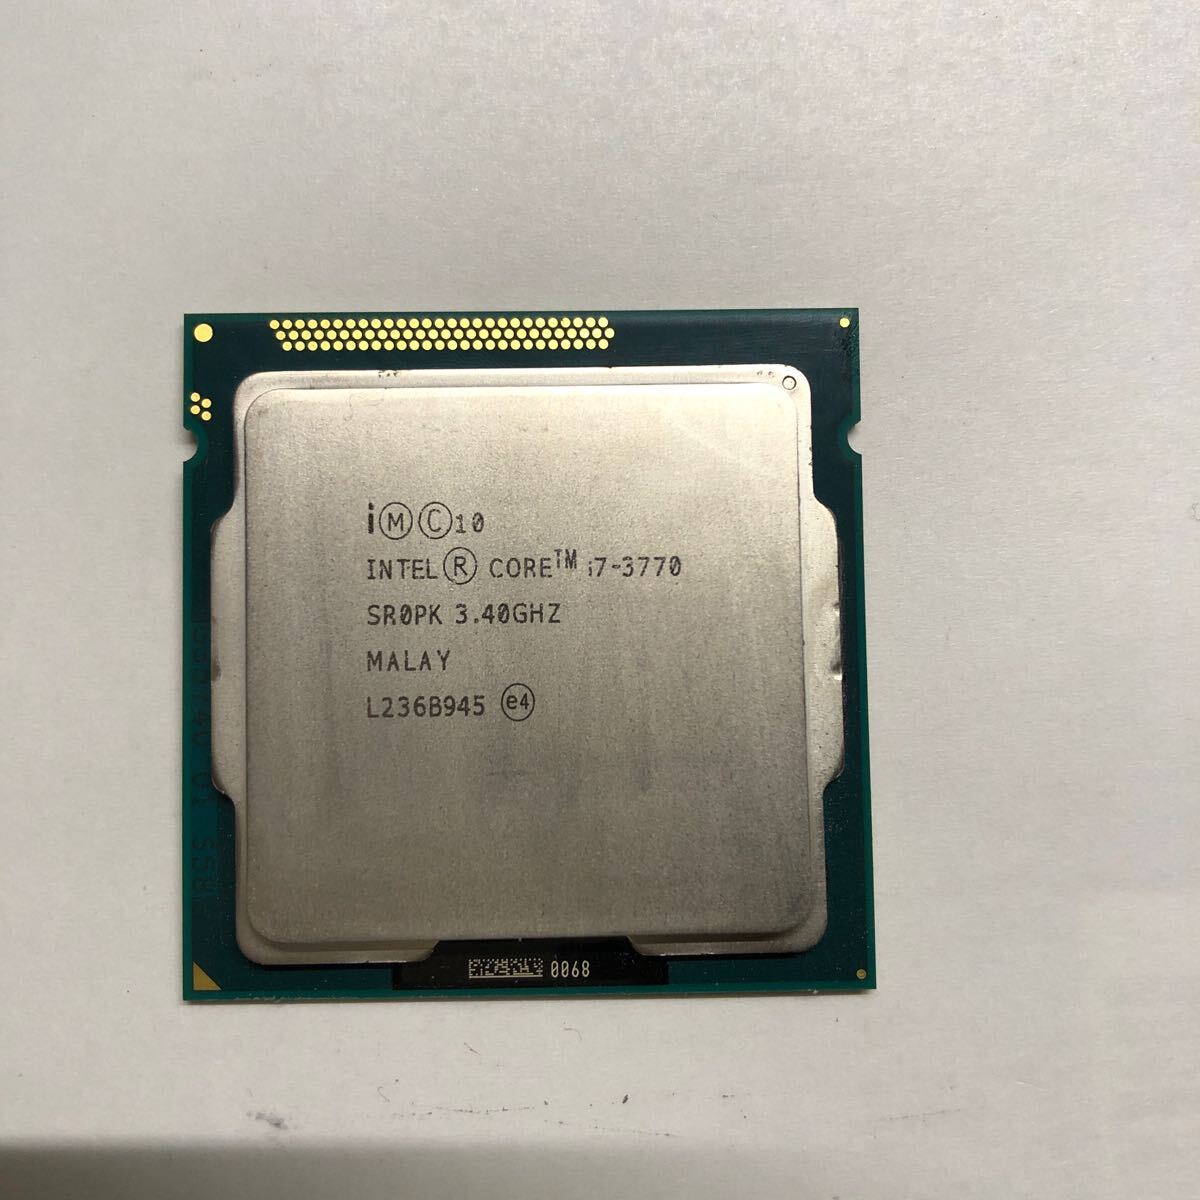 Intel Core i7-3770 SR0PK 3.40GHz /p81_画像1